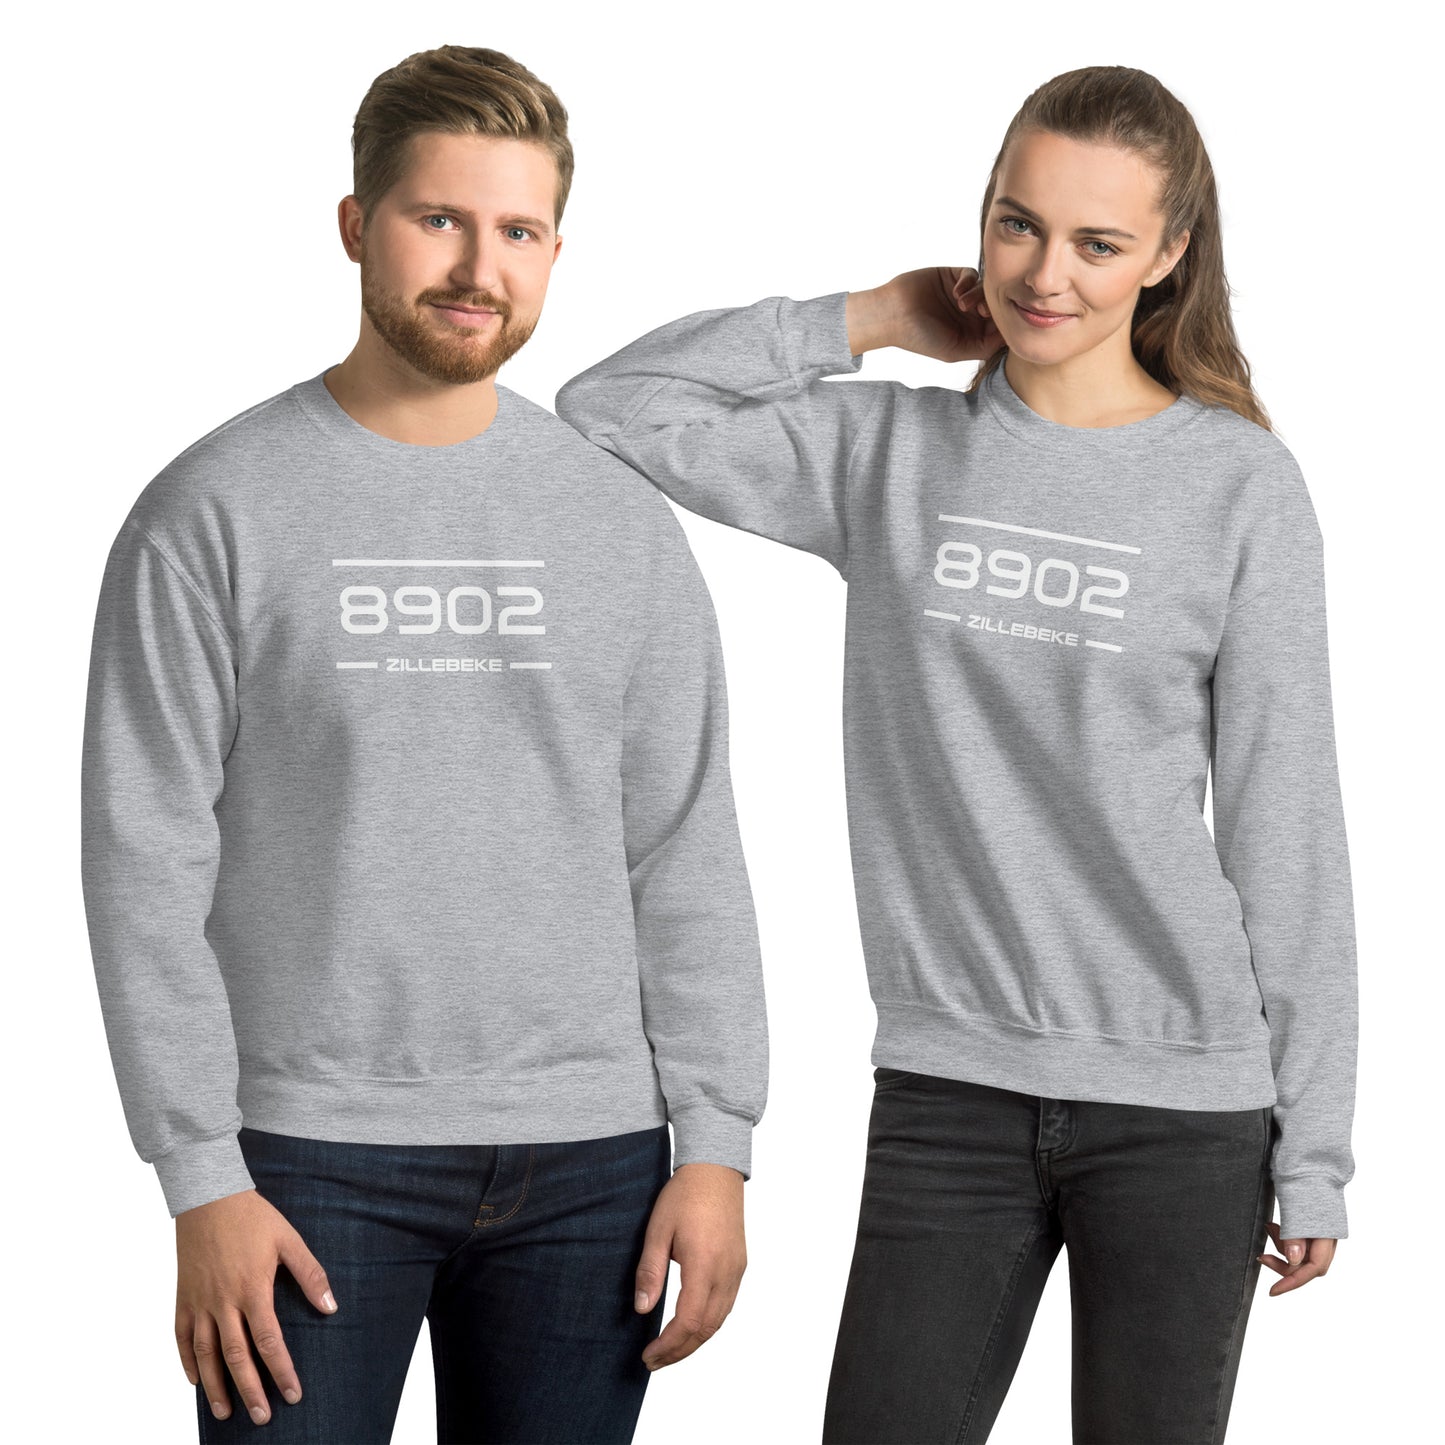 Sweater - 8902 - Zillebeke (M/V)